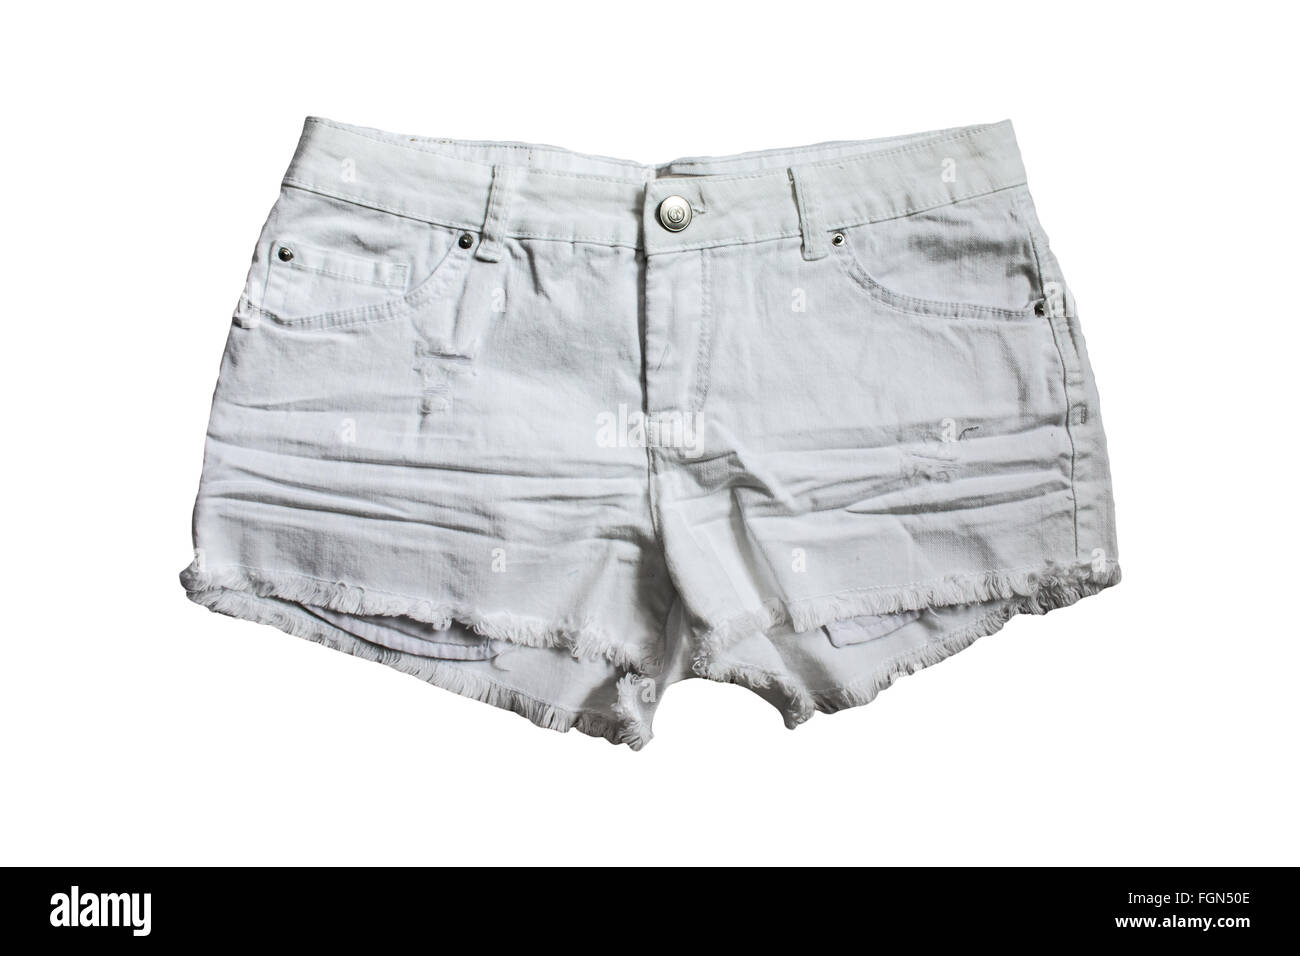 jeans shorts isolated on white background. Stock Photo